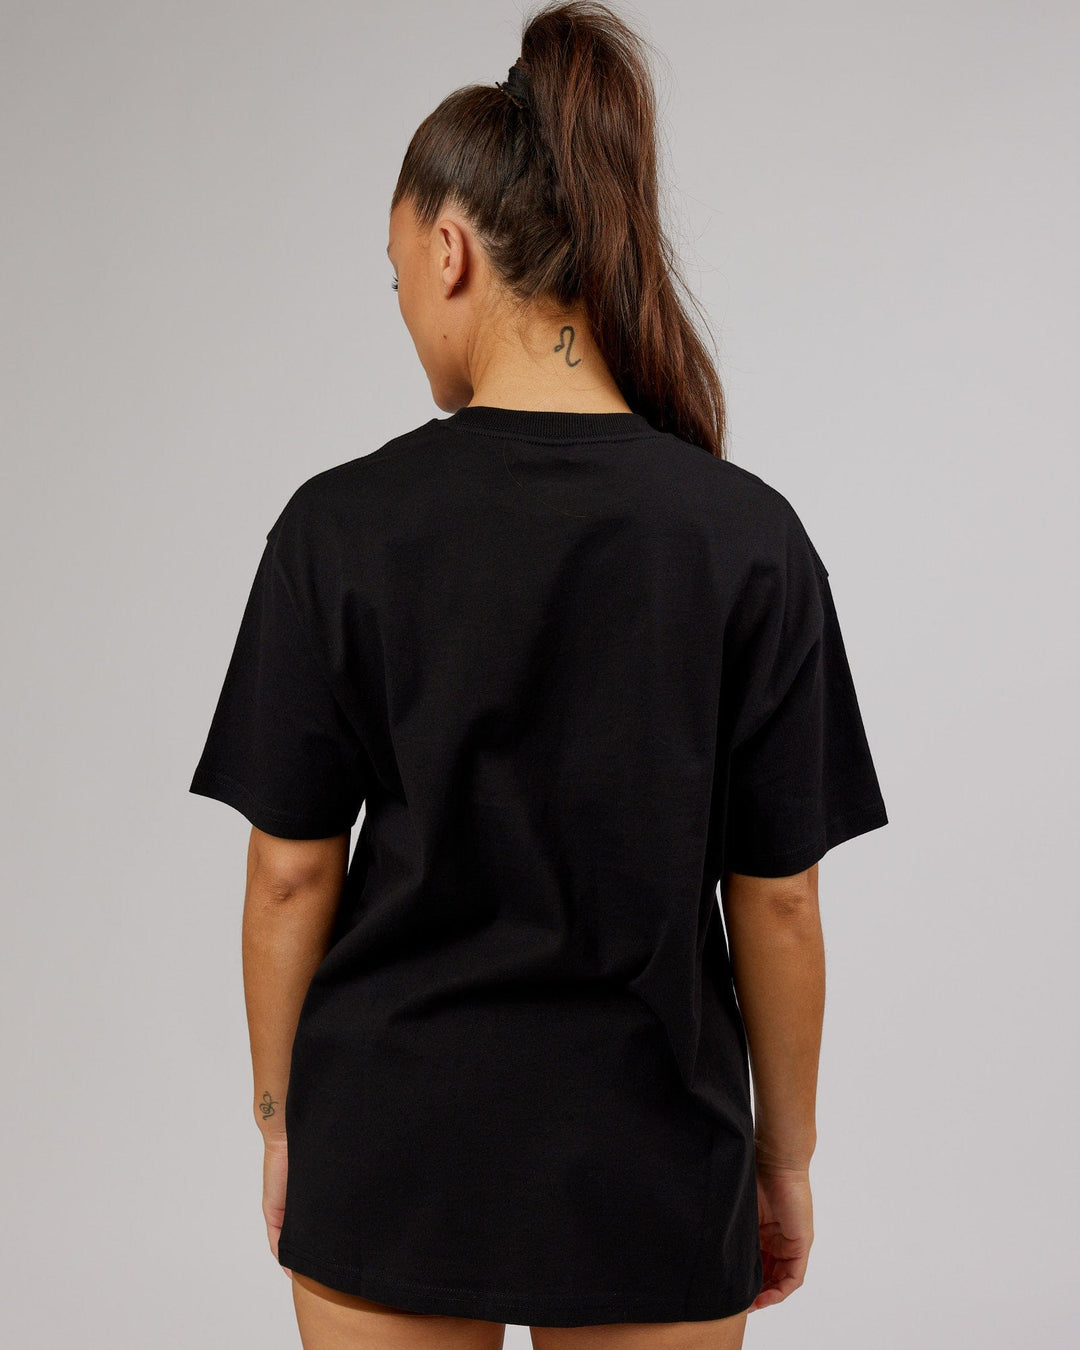 Woman wearing Unisex Stamped 2.0 Heavyweight Tee Oversize - Black